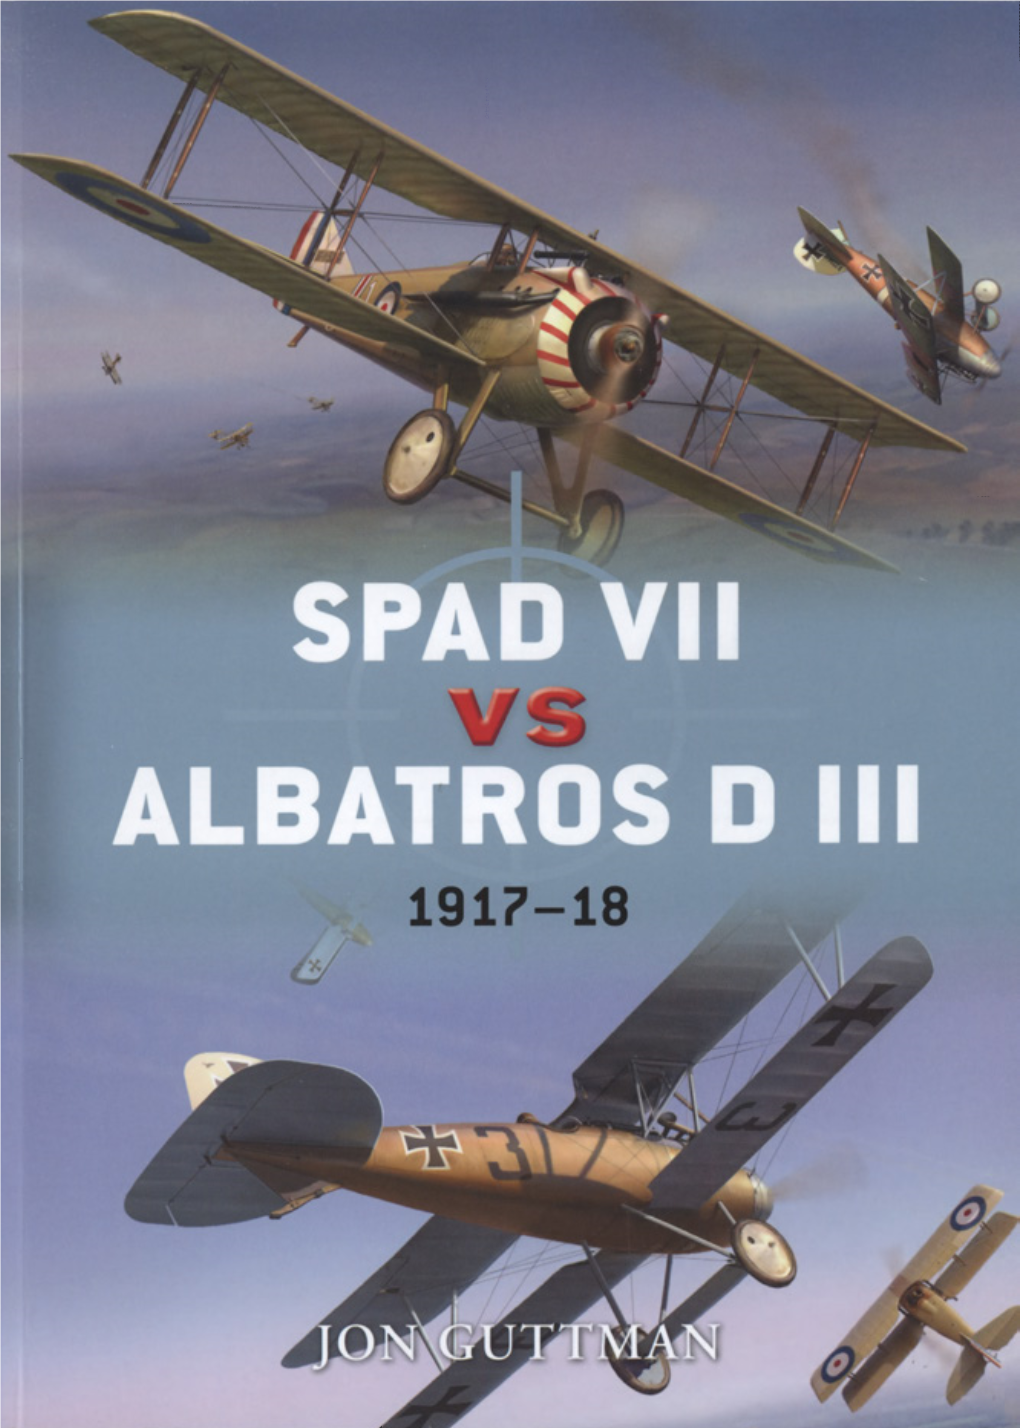 SPAD VII Vs Albatros D III: 1917-18